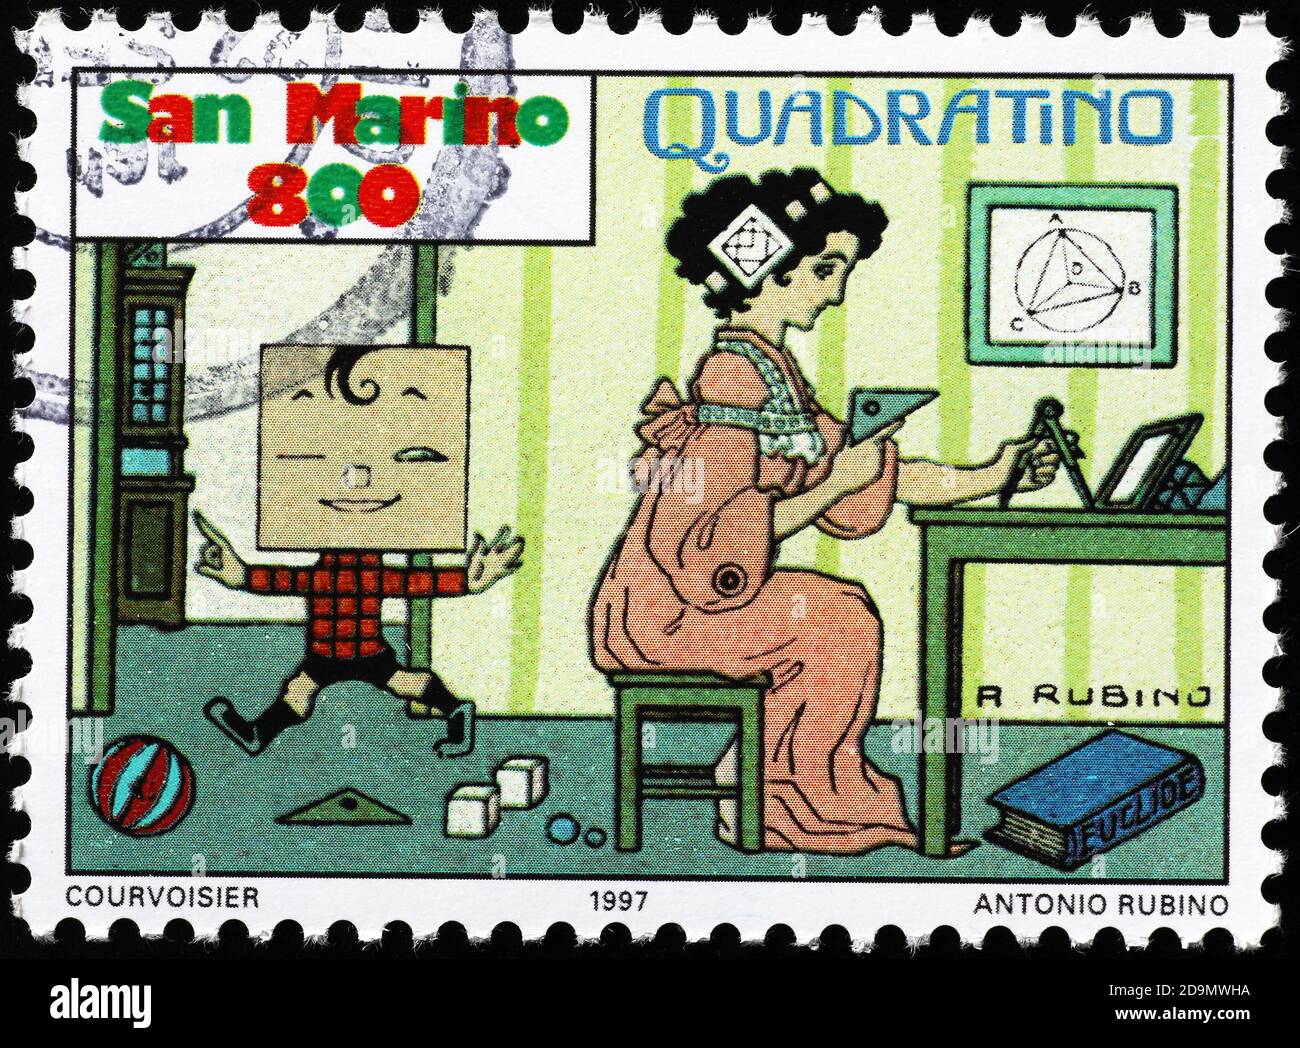 Alte italienische Karikatur Quadratino auf Briefmarke Stockfoto